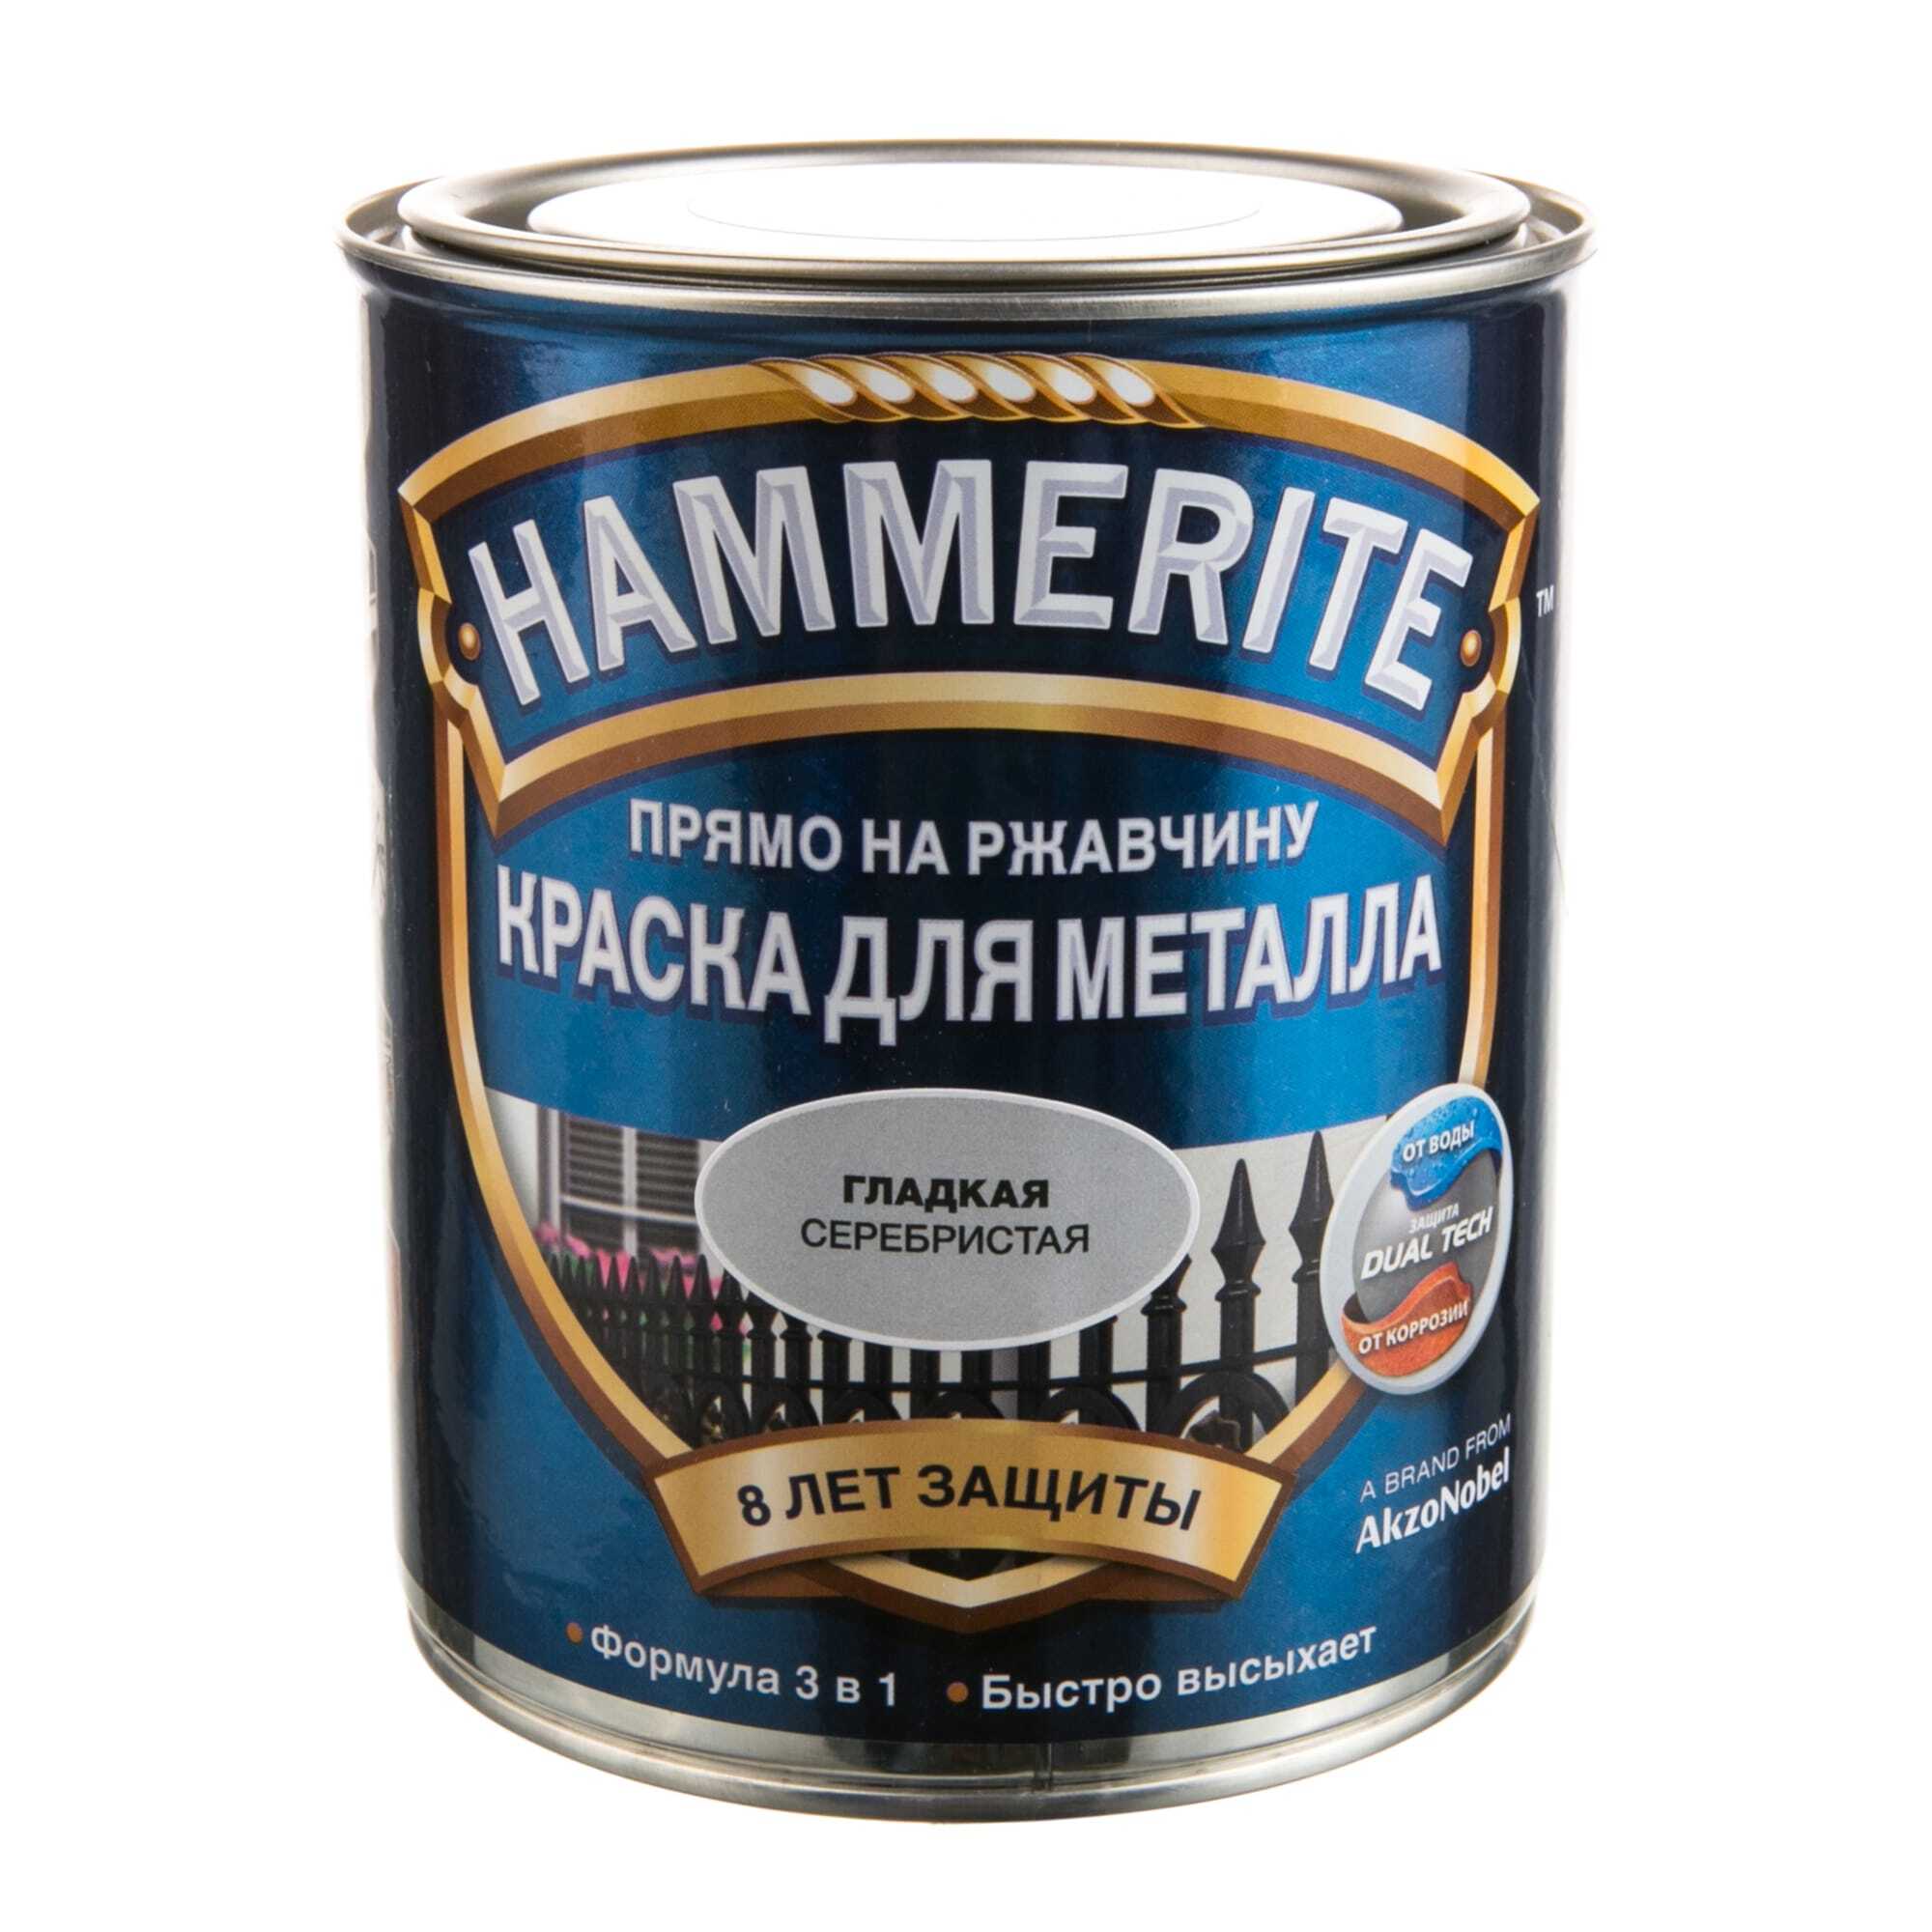 Купить краску по ржавчине в леруа мерлен. Hammerite краска молотковая красная 0,75 л. Краска Hammerite,черная гладкая (750 мл. Краска Hammerite молотковая. Краска алкидная Hammerite для металлических поверхностей гладкая глянцевая.